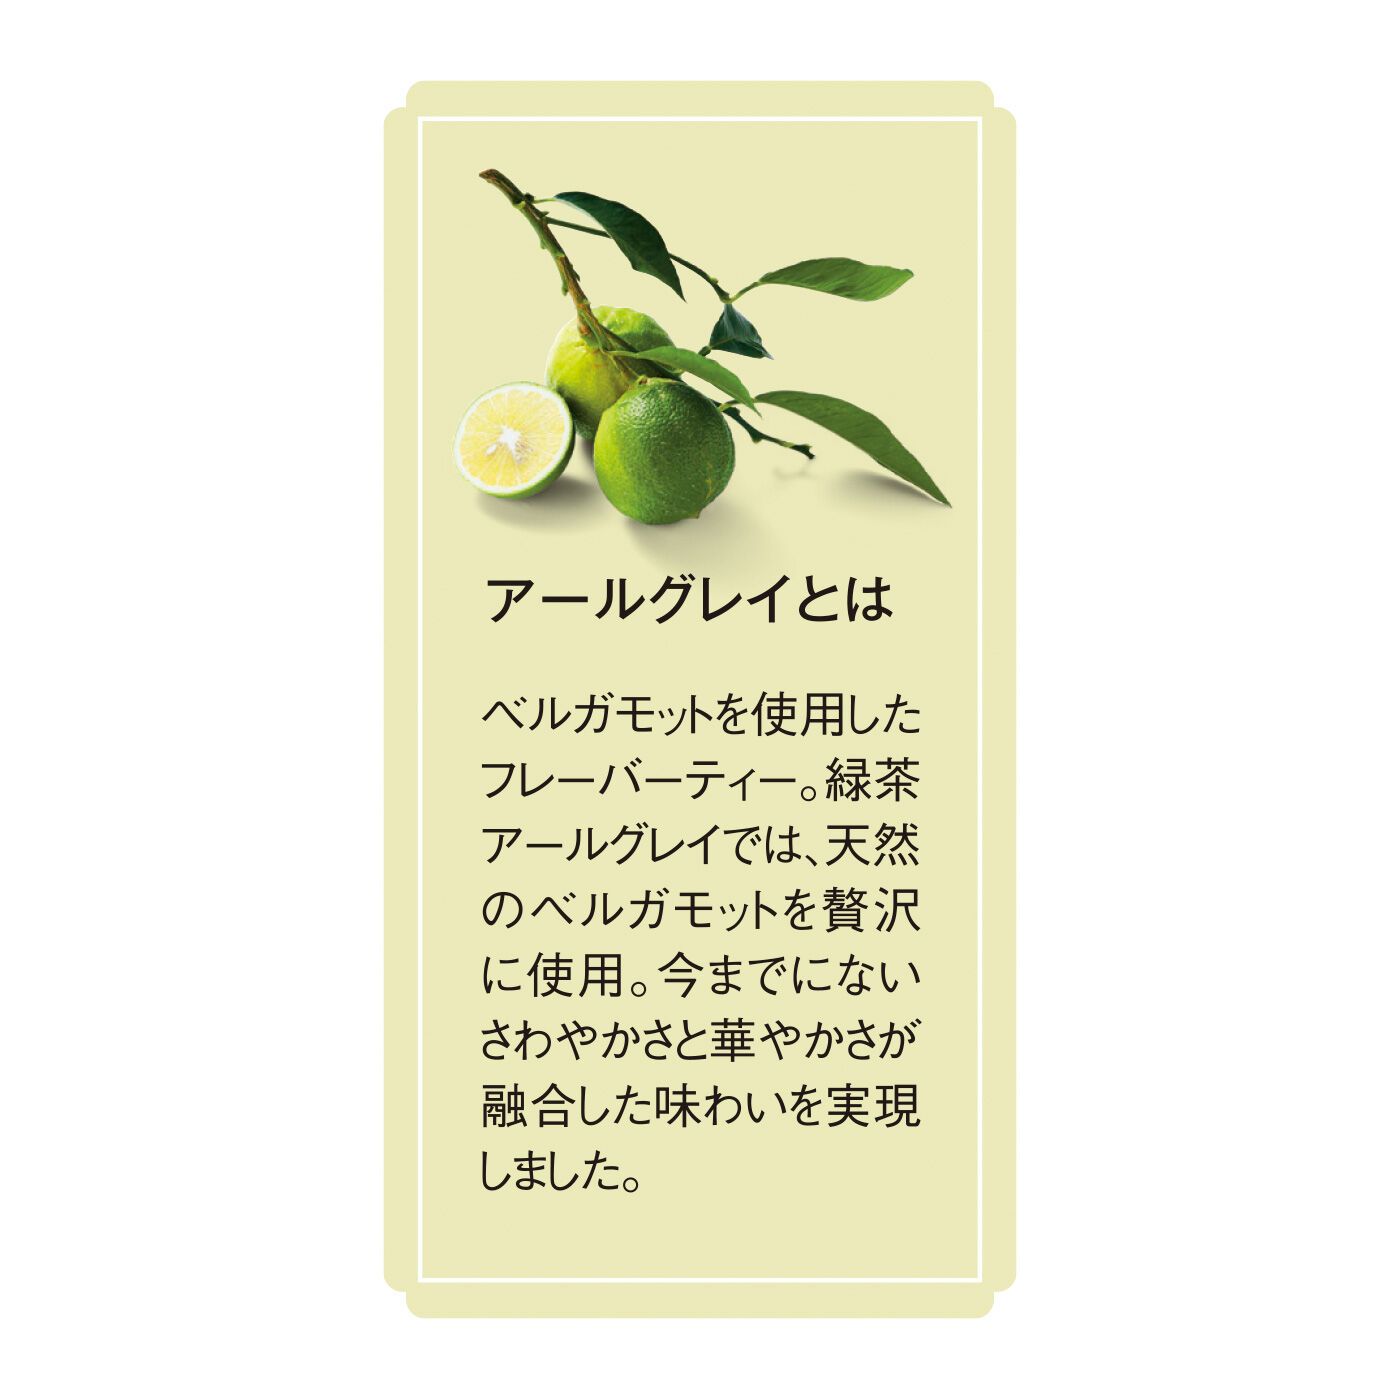 FELISSIMO PARTNERS|神戸キャセリンハウス シャンパングリーンの輝き 緑茶アールグレイの会（6回予約）